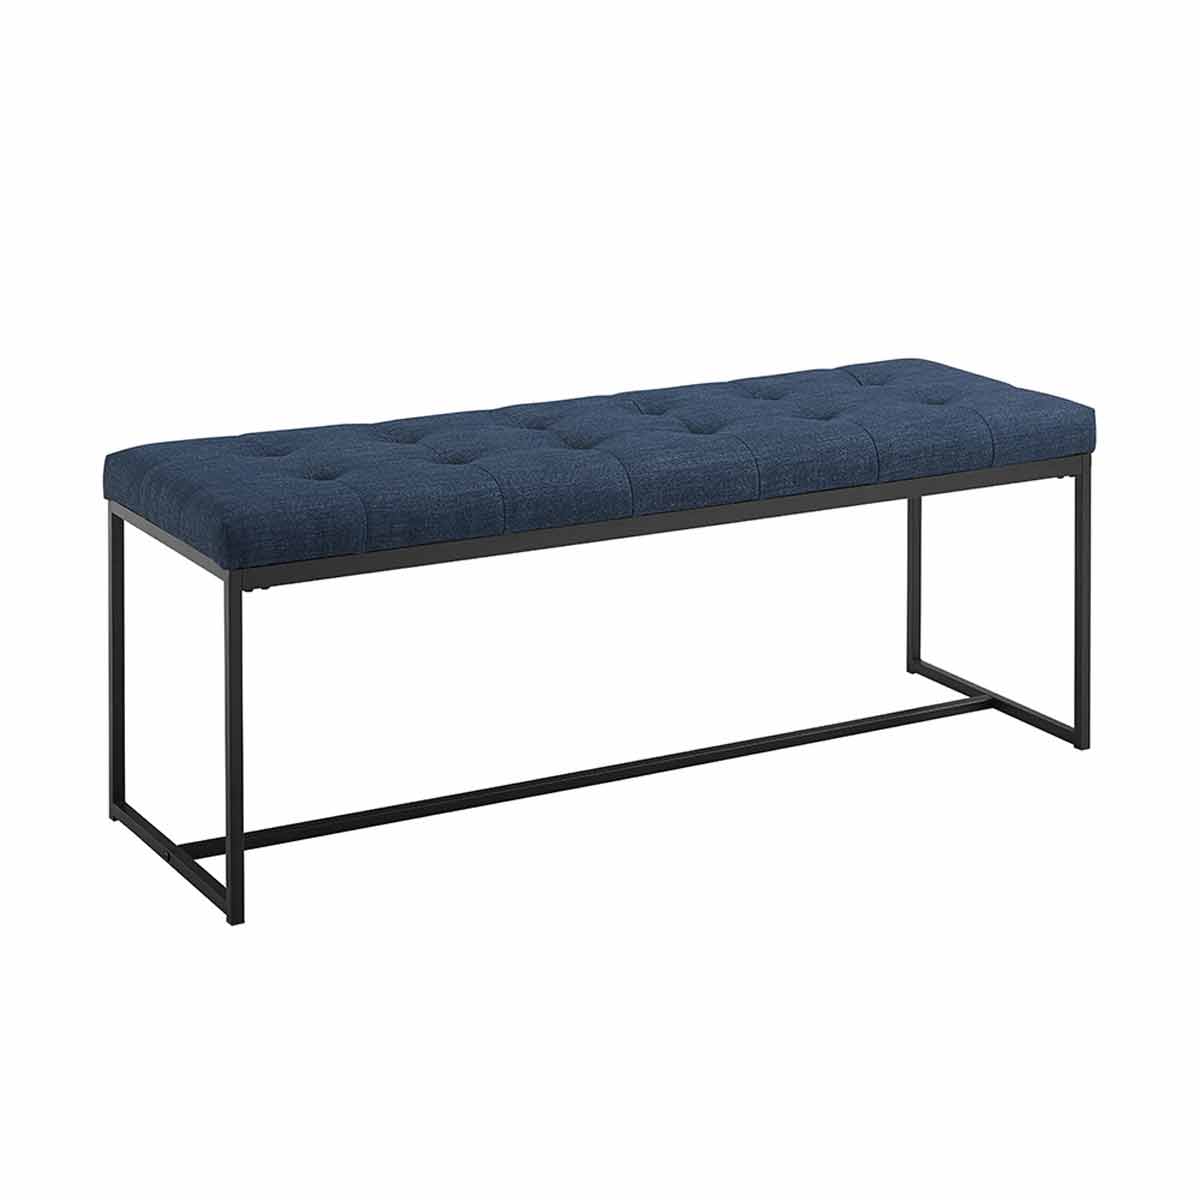 48" Upholstered Bench W/ Metal Base - Navy Blue